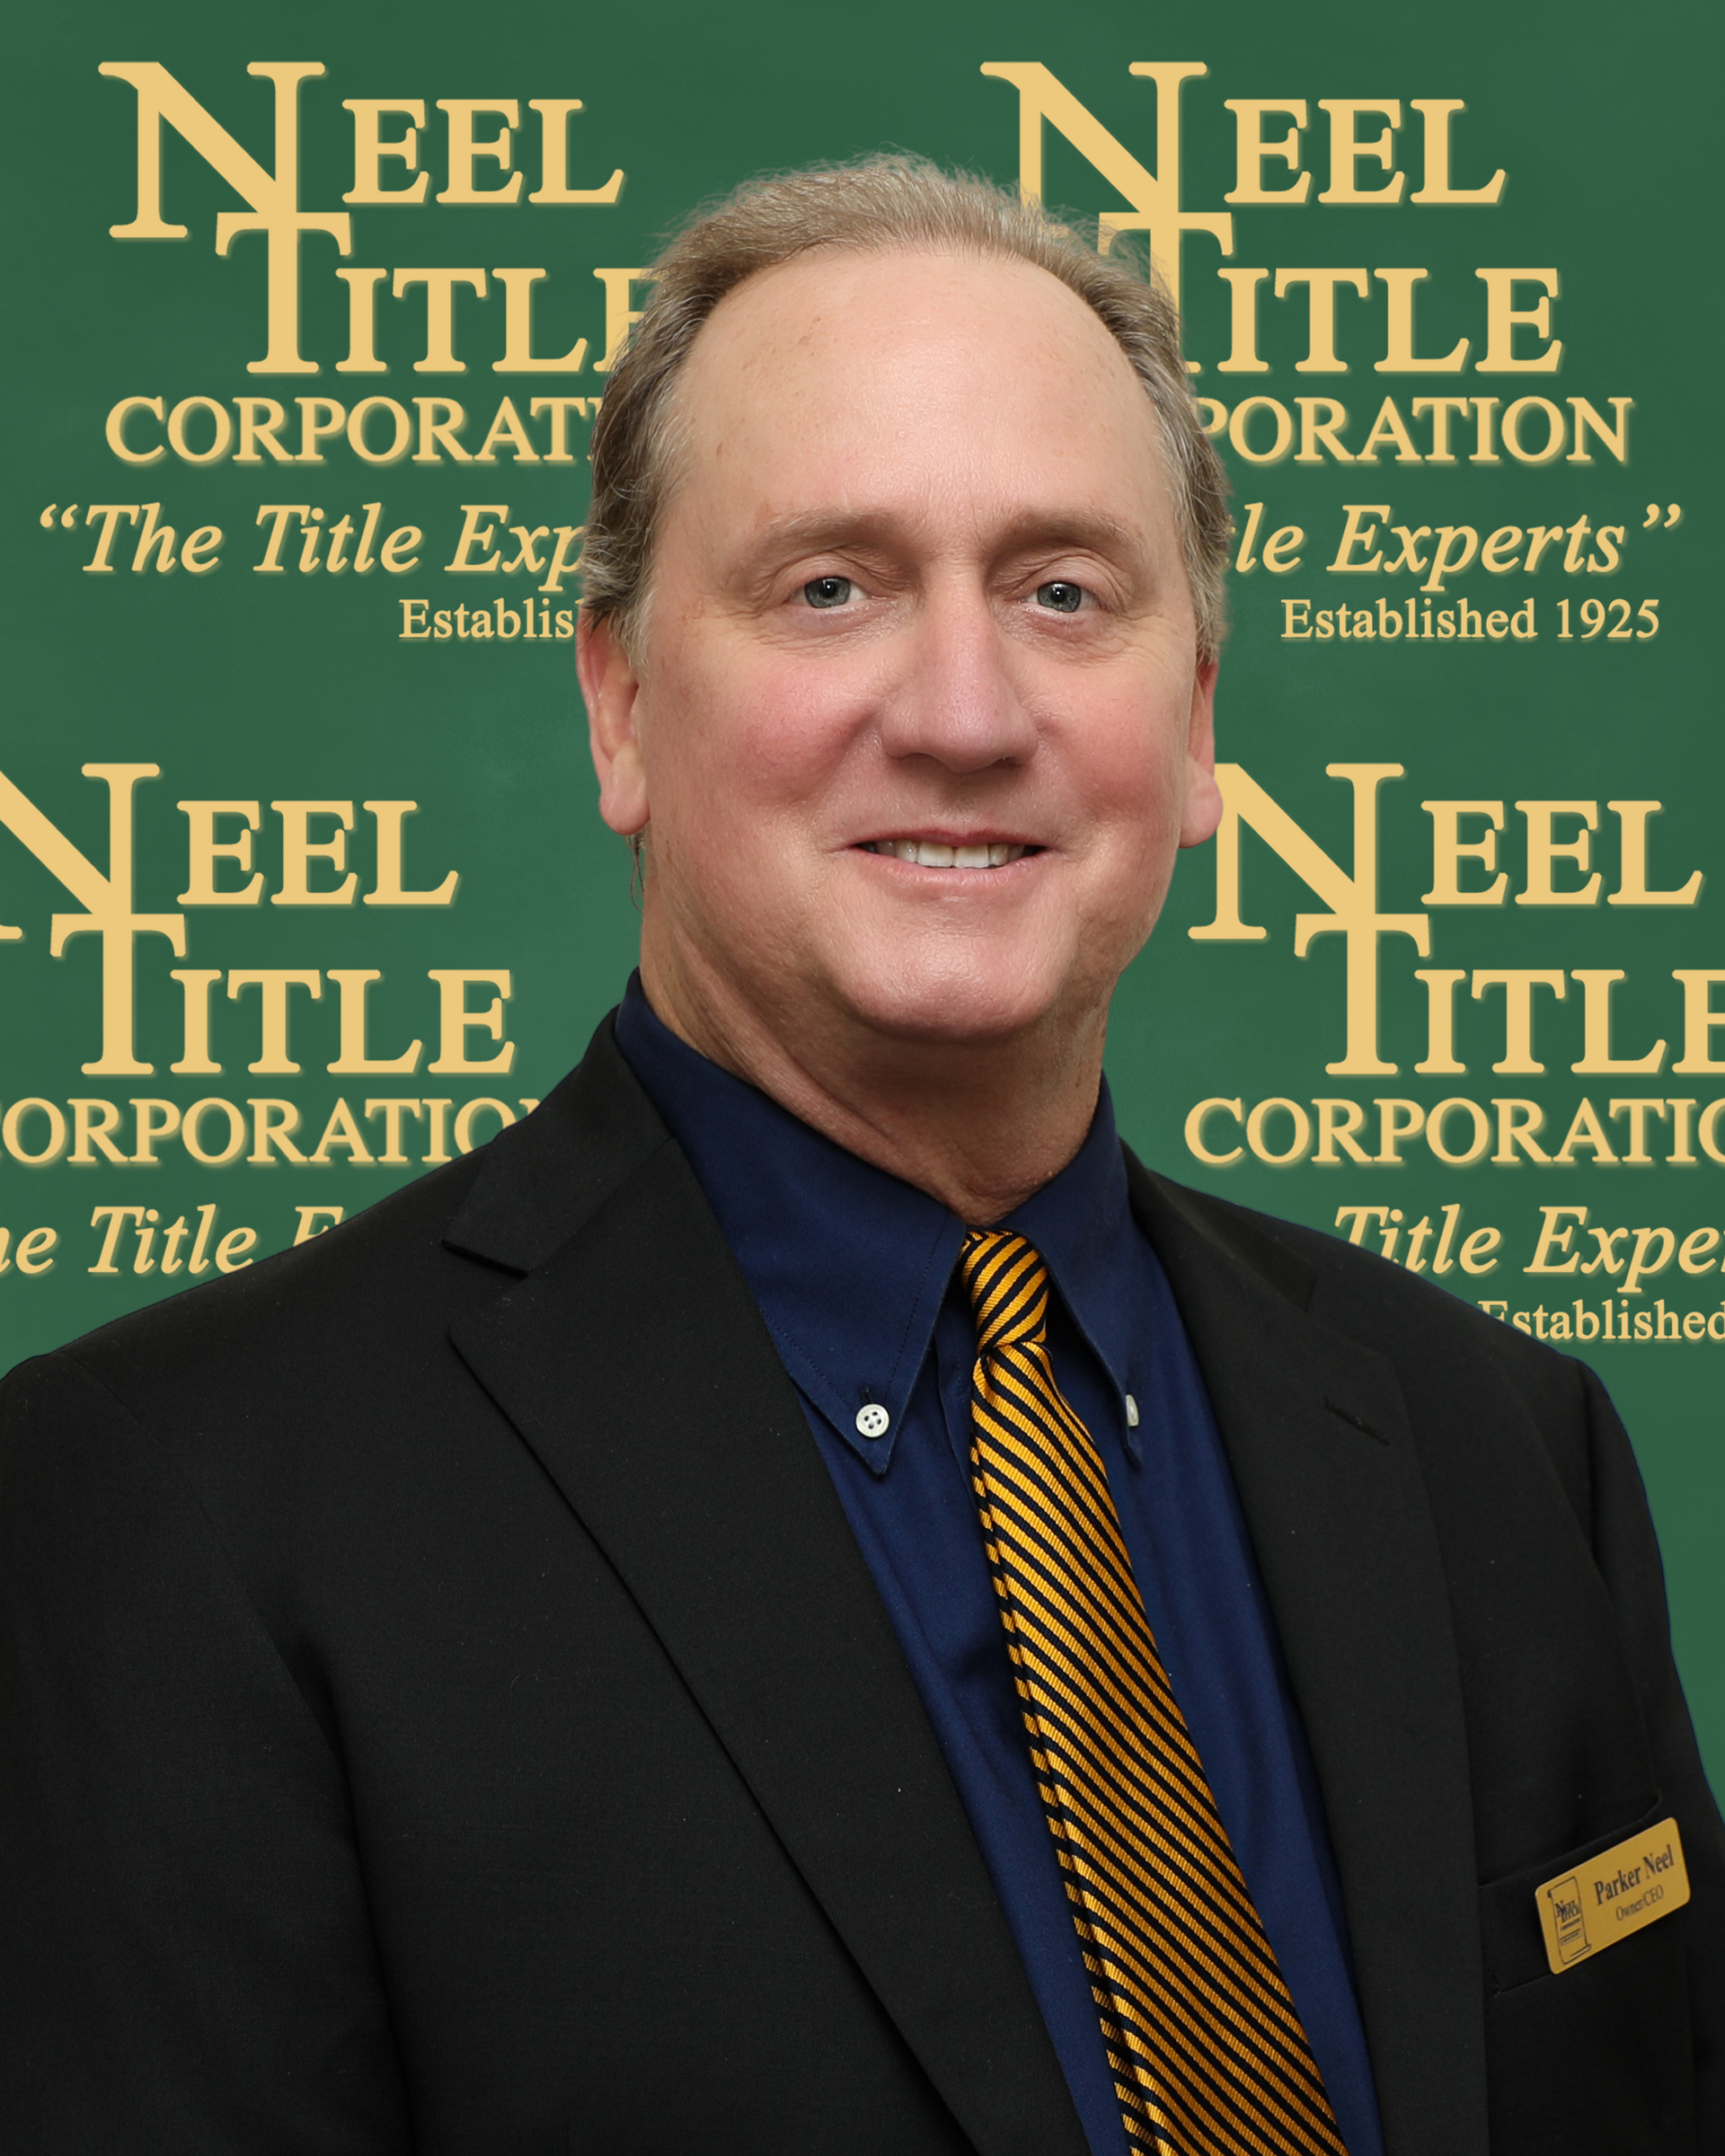 Mr. Neel on Green Background — Laredo, TX — Neel Title